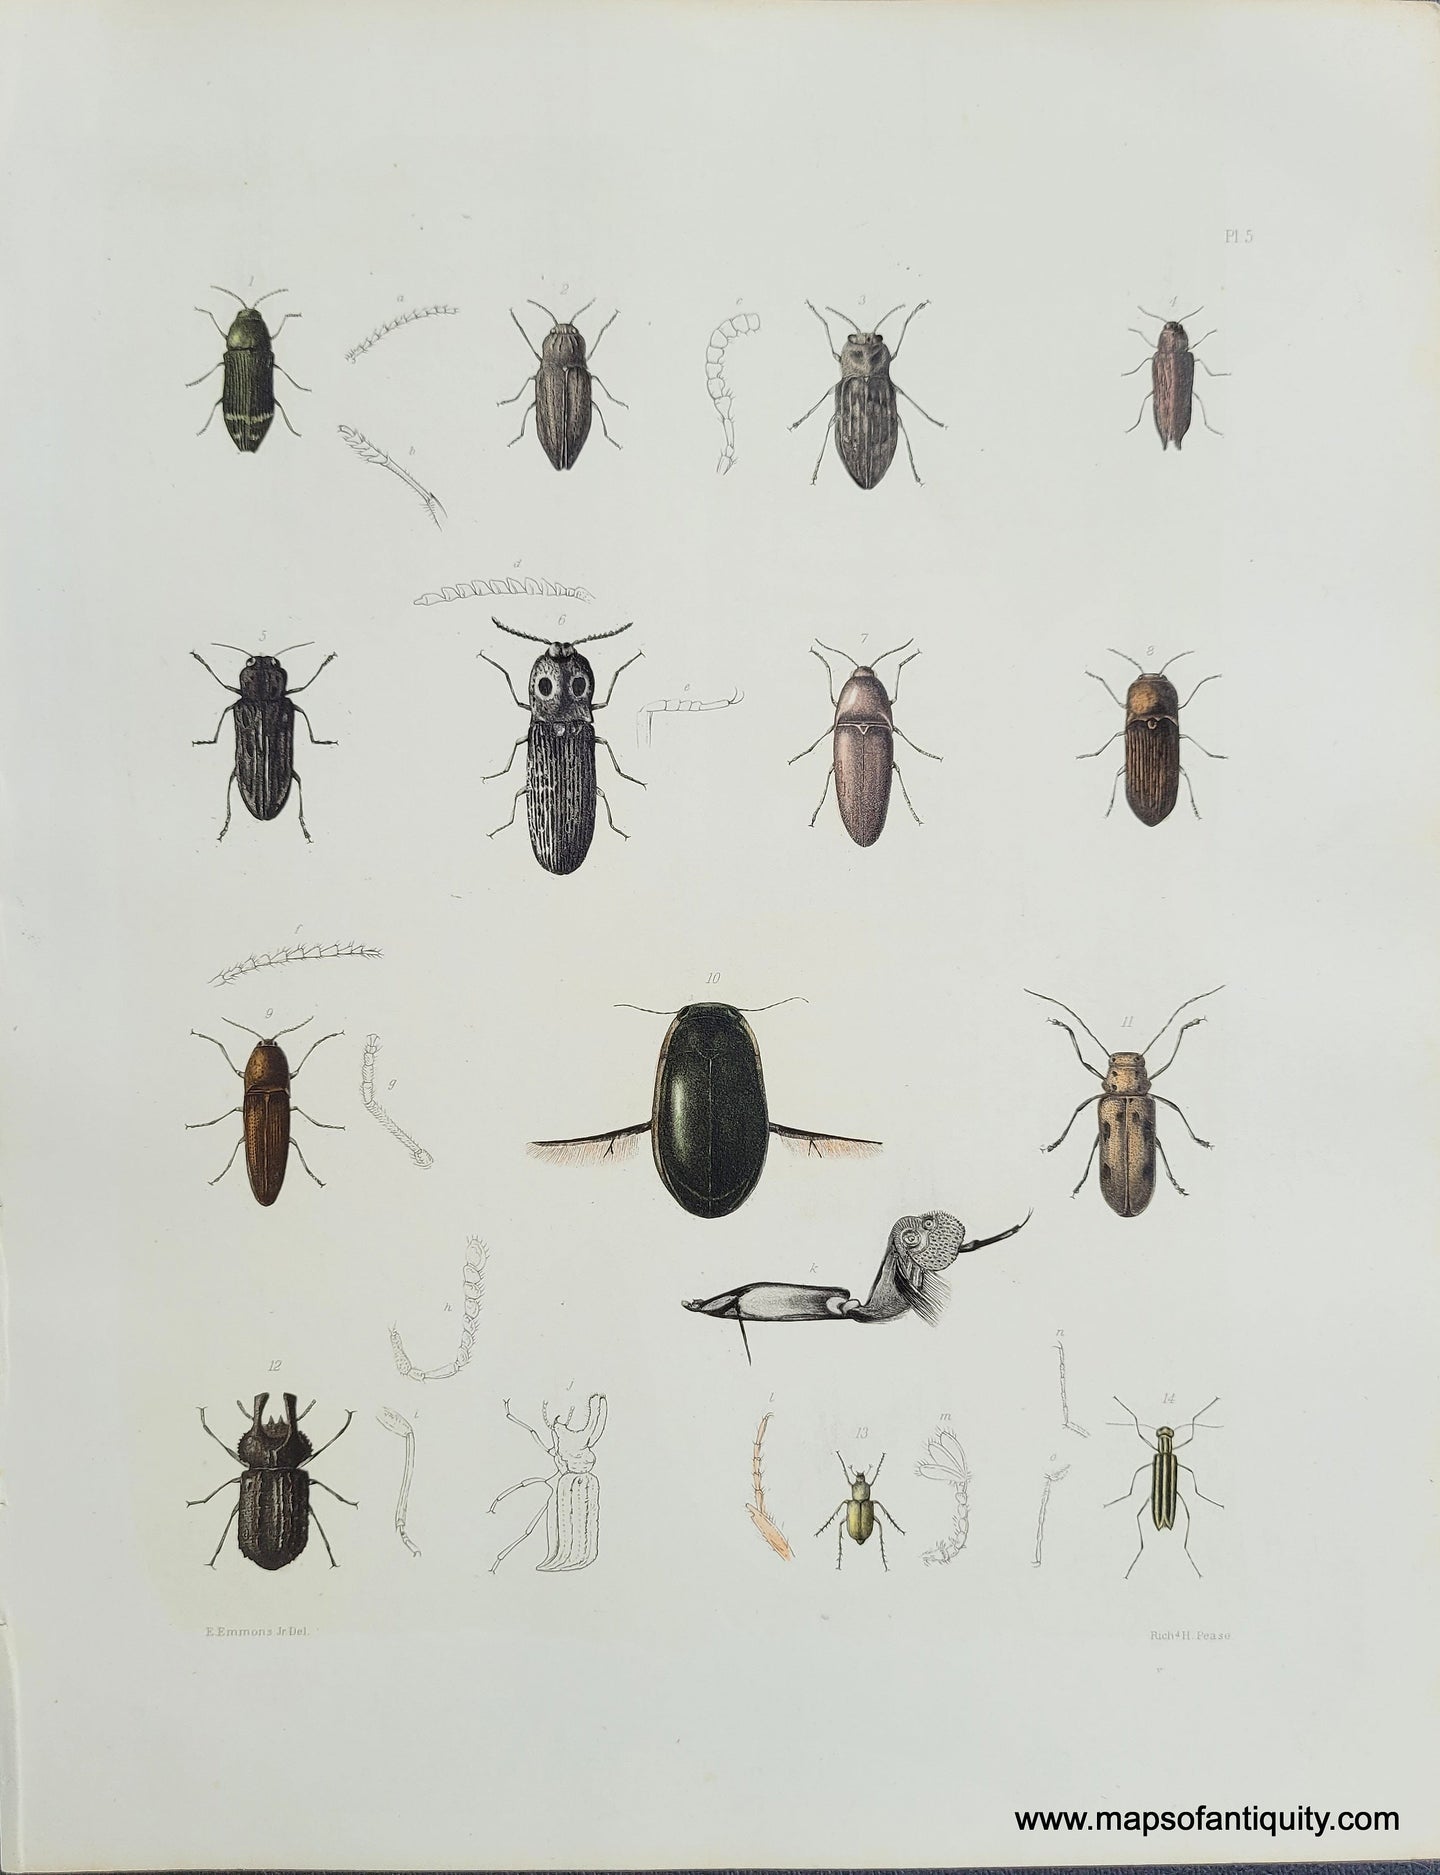 Genuine-Antique-Print-Beetles-1854-Pease-Maps-Of-Antiquity